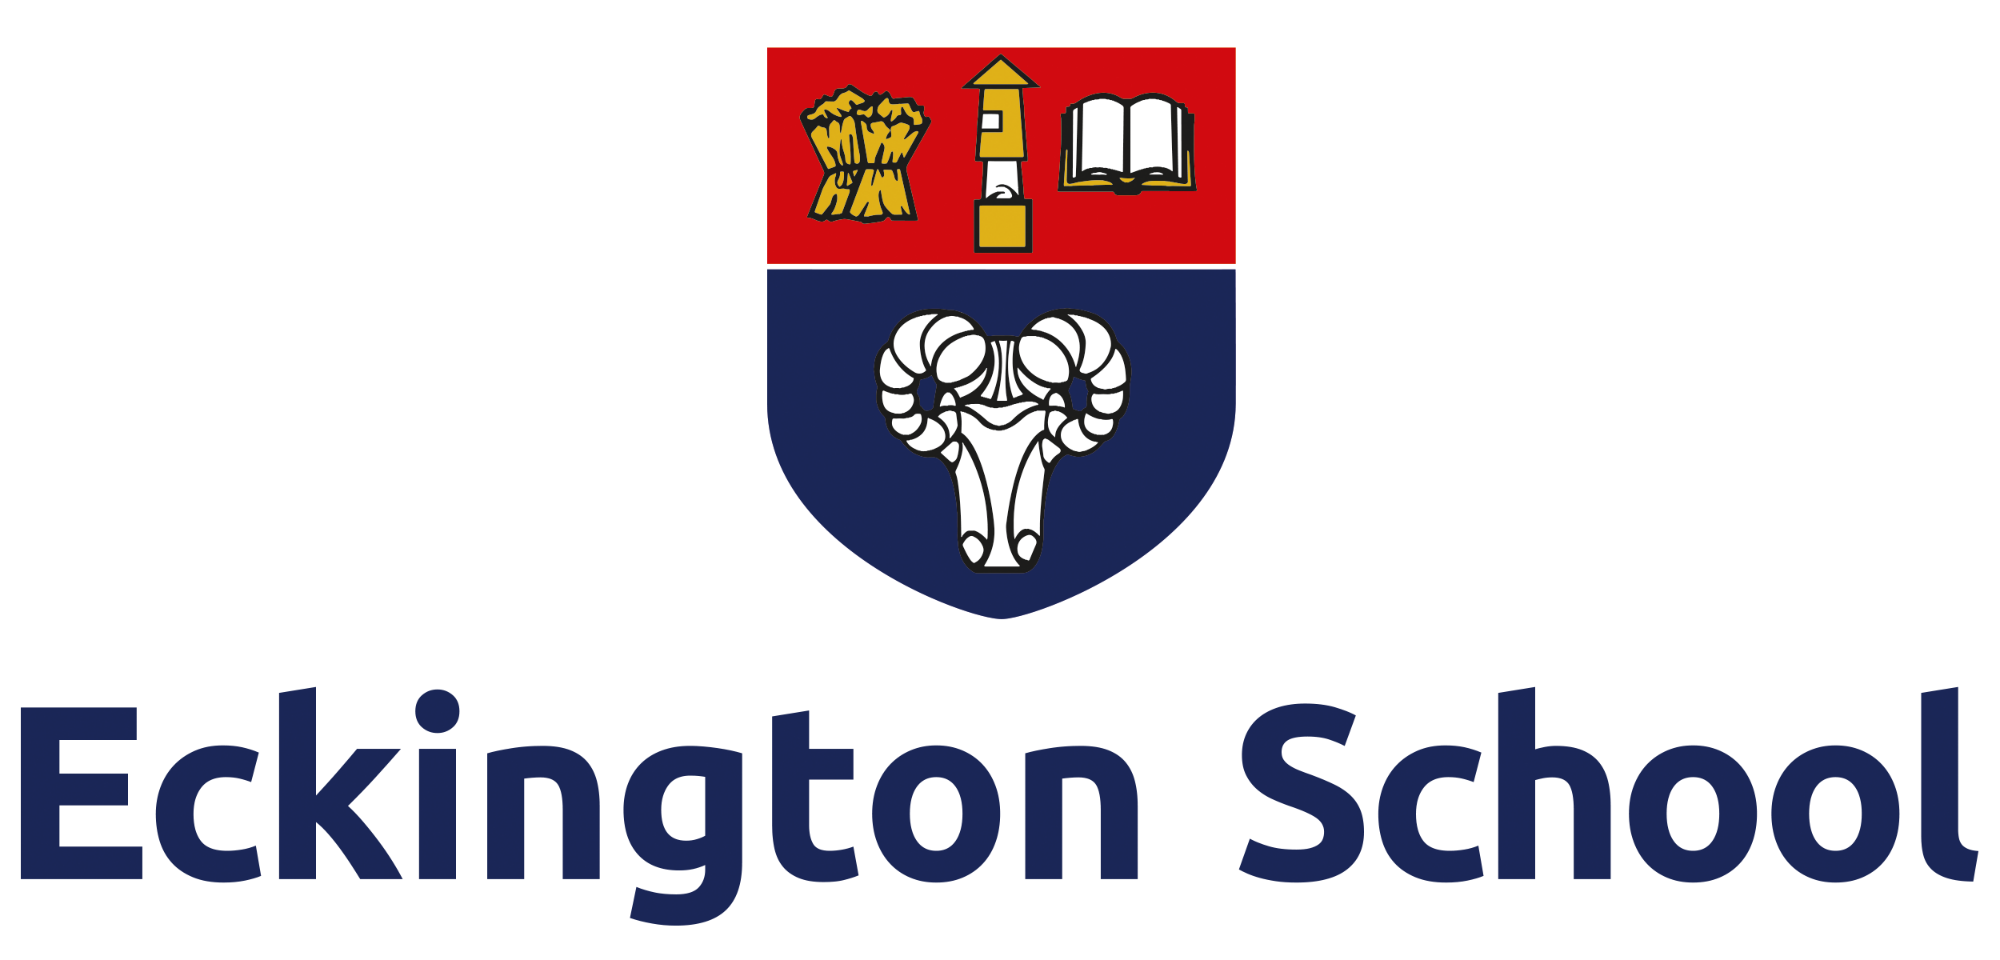 Eckington School logo